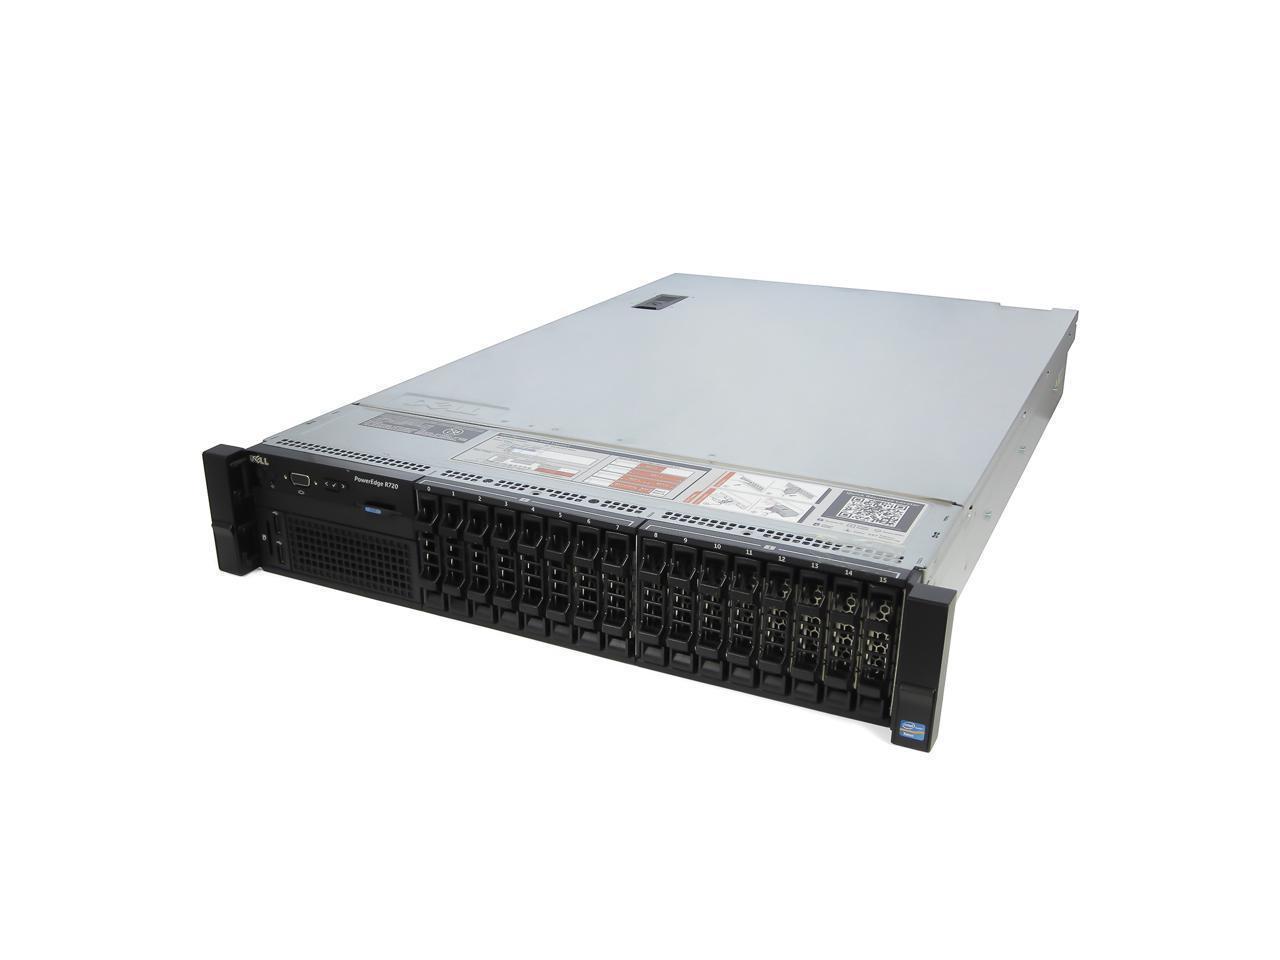 RAM Mounts DELL POWEREDGE R720 2 x INTEL XEON E5-2640 64GB RAM 2 x 1.2TB 10K SAS H710P 